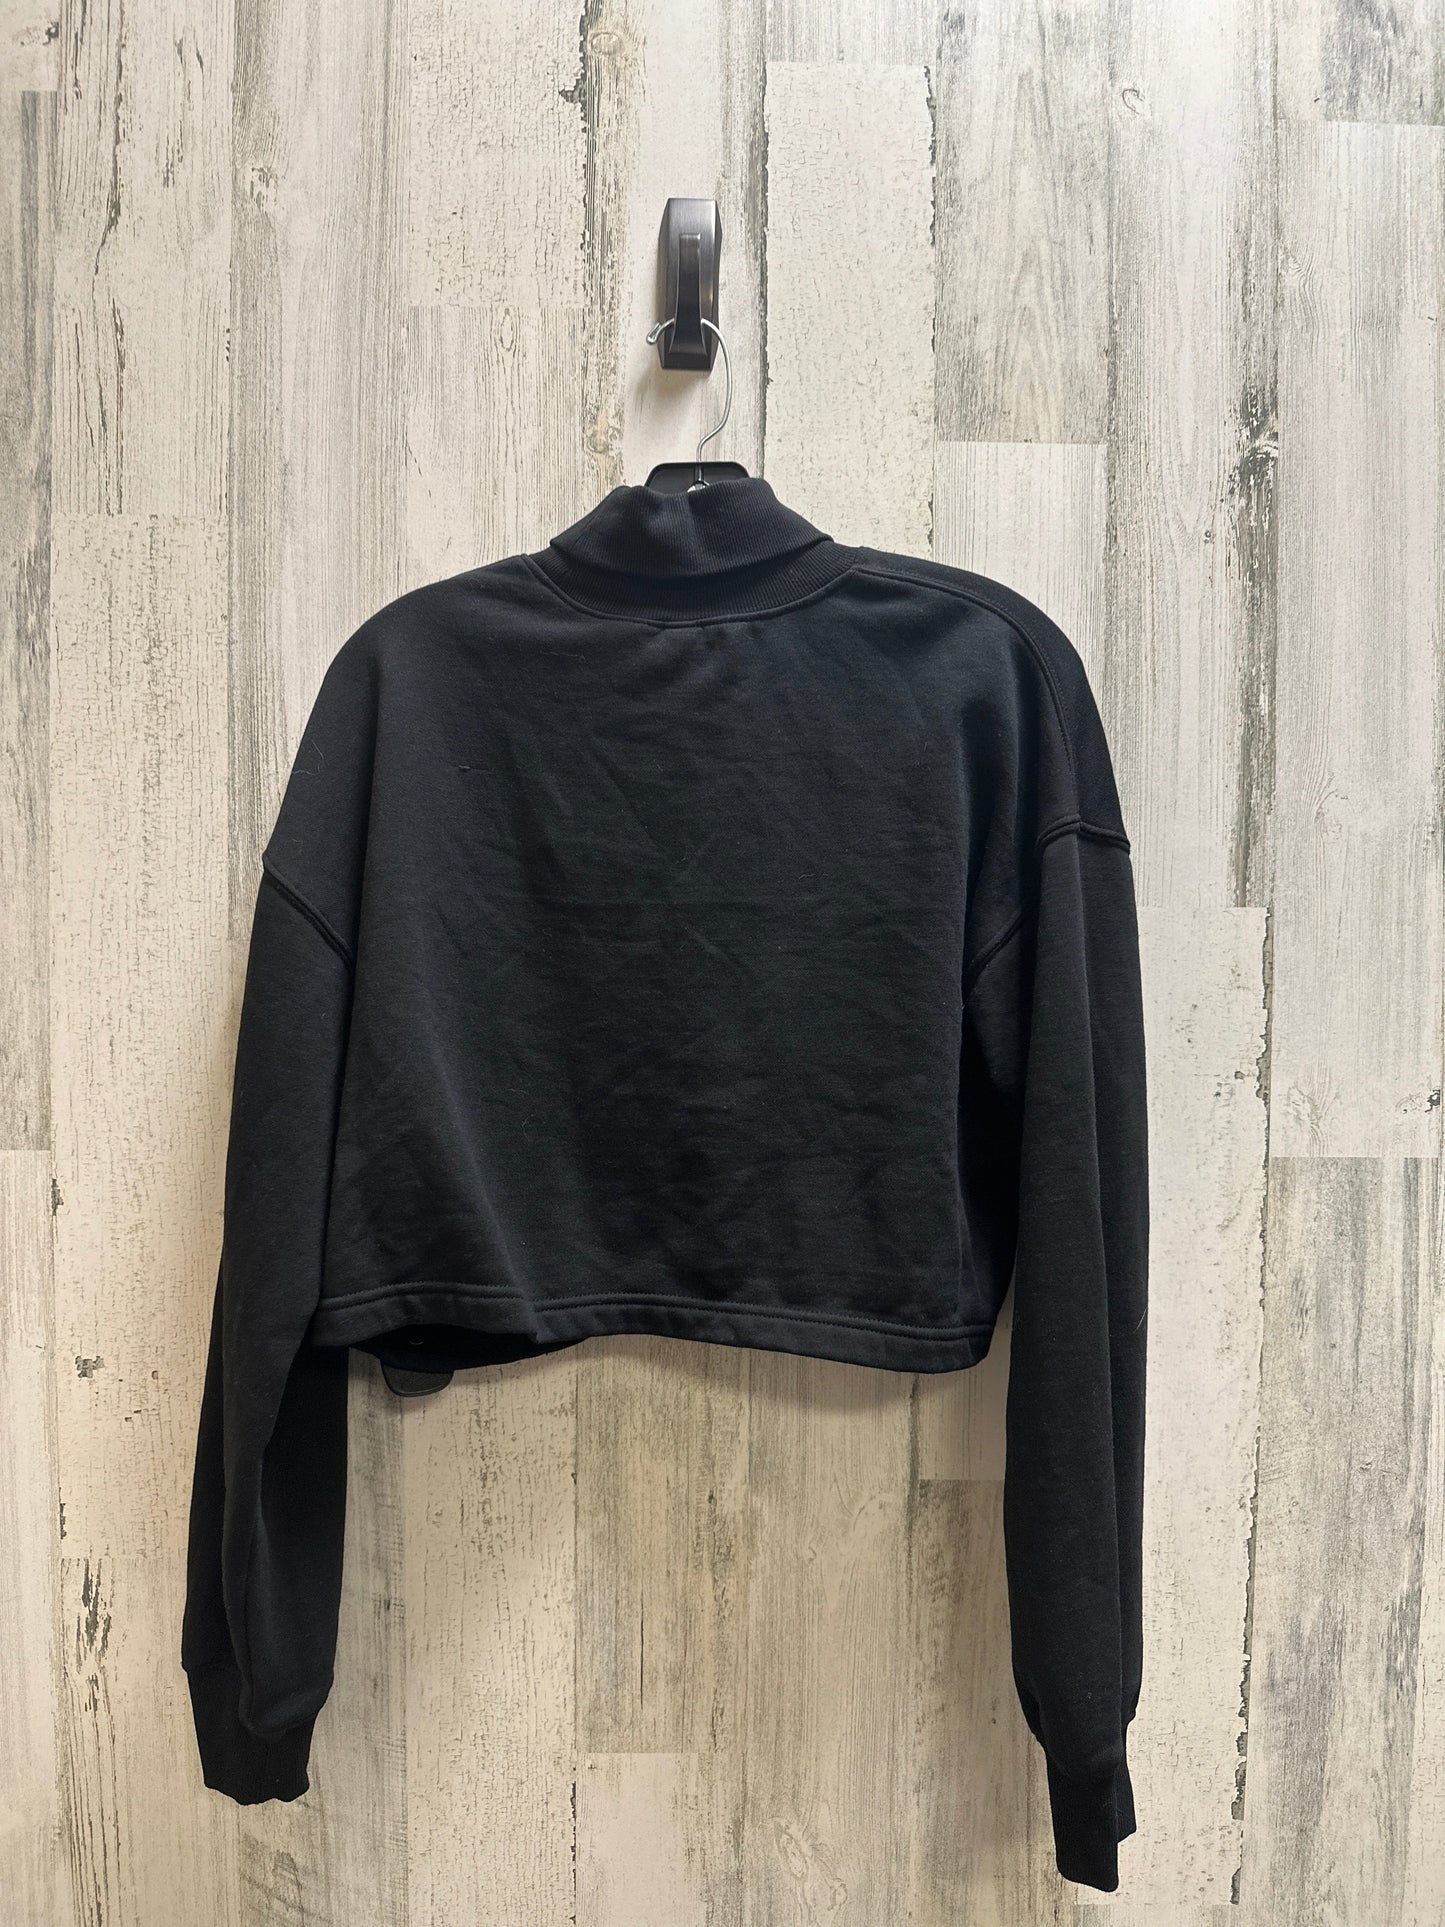 Sweatshirt Crewneck By Divided  Size: L